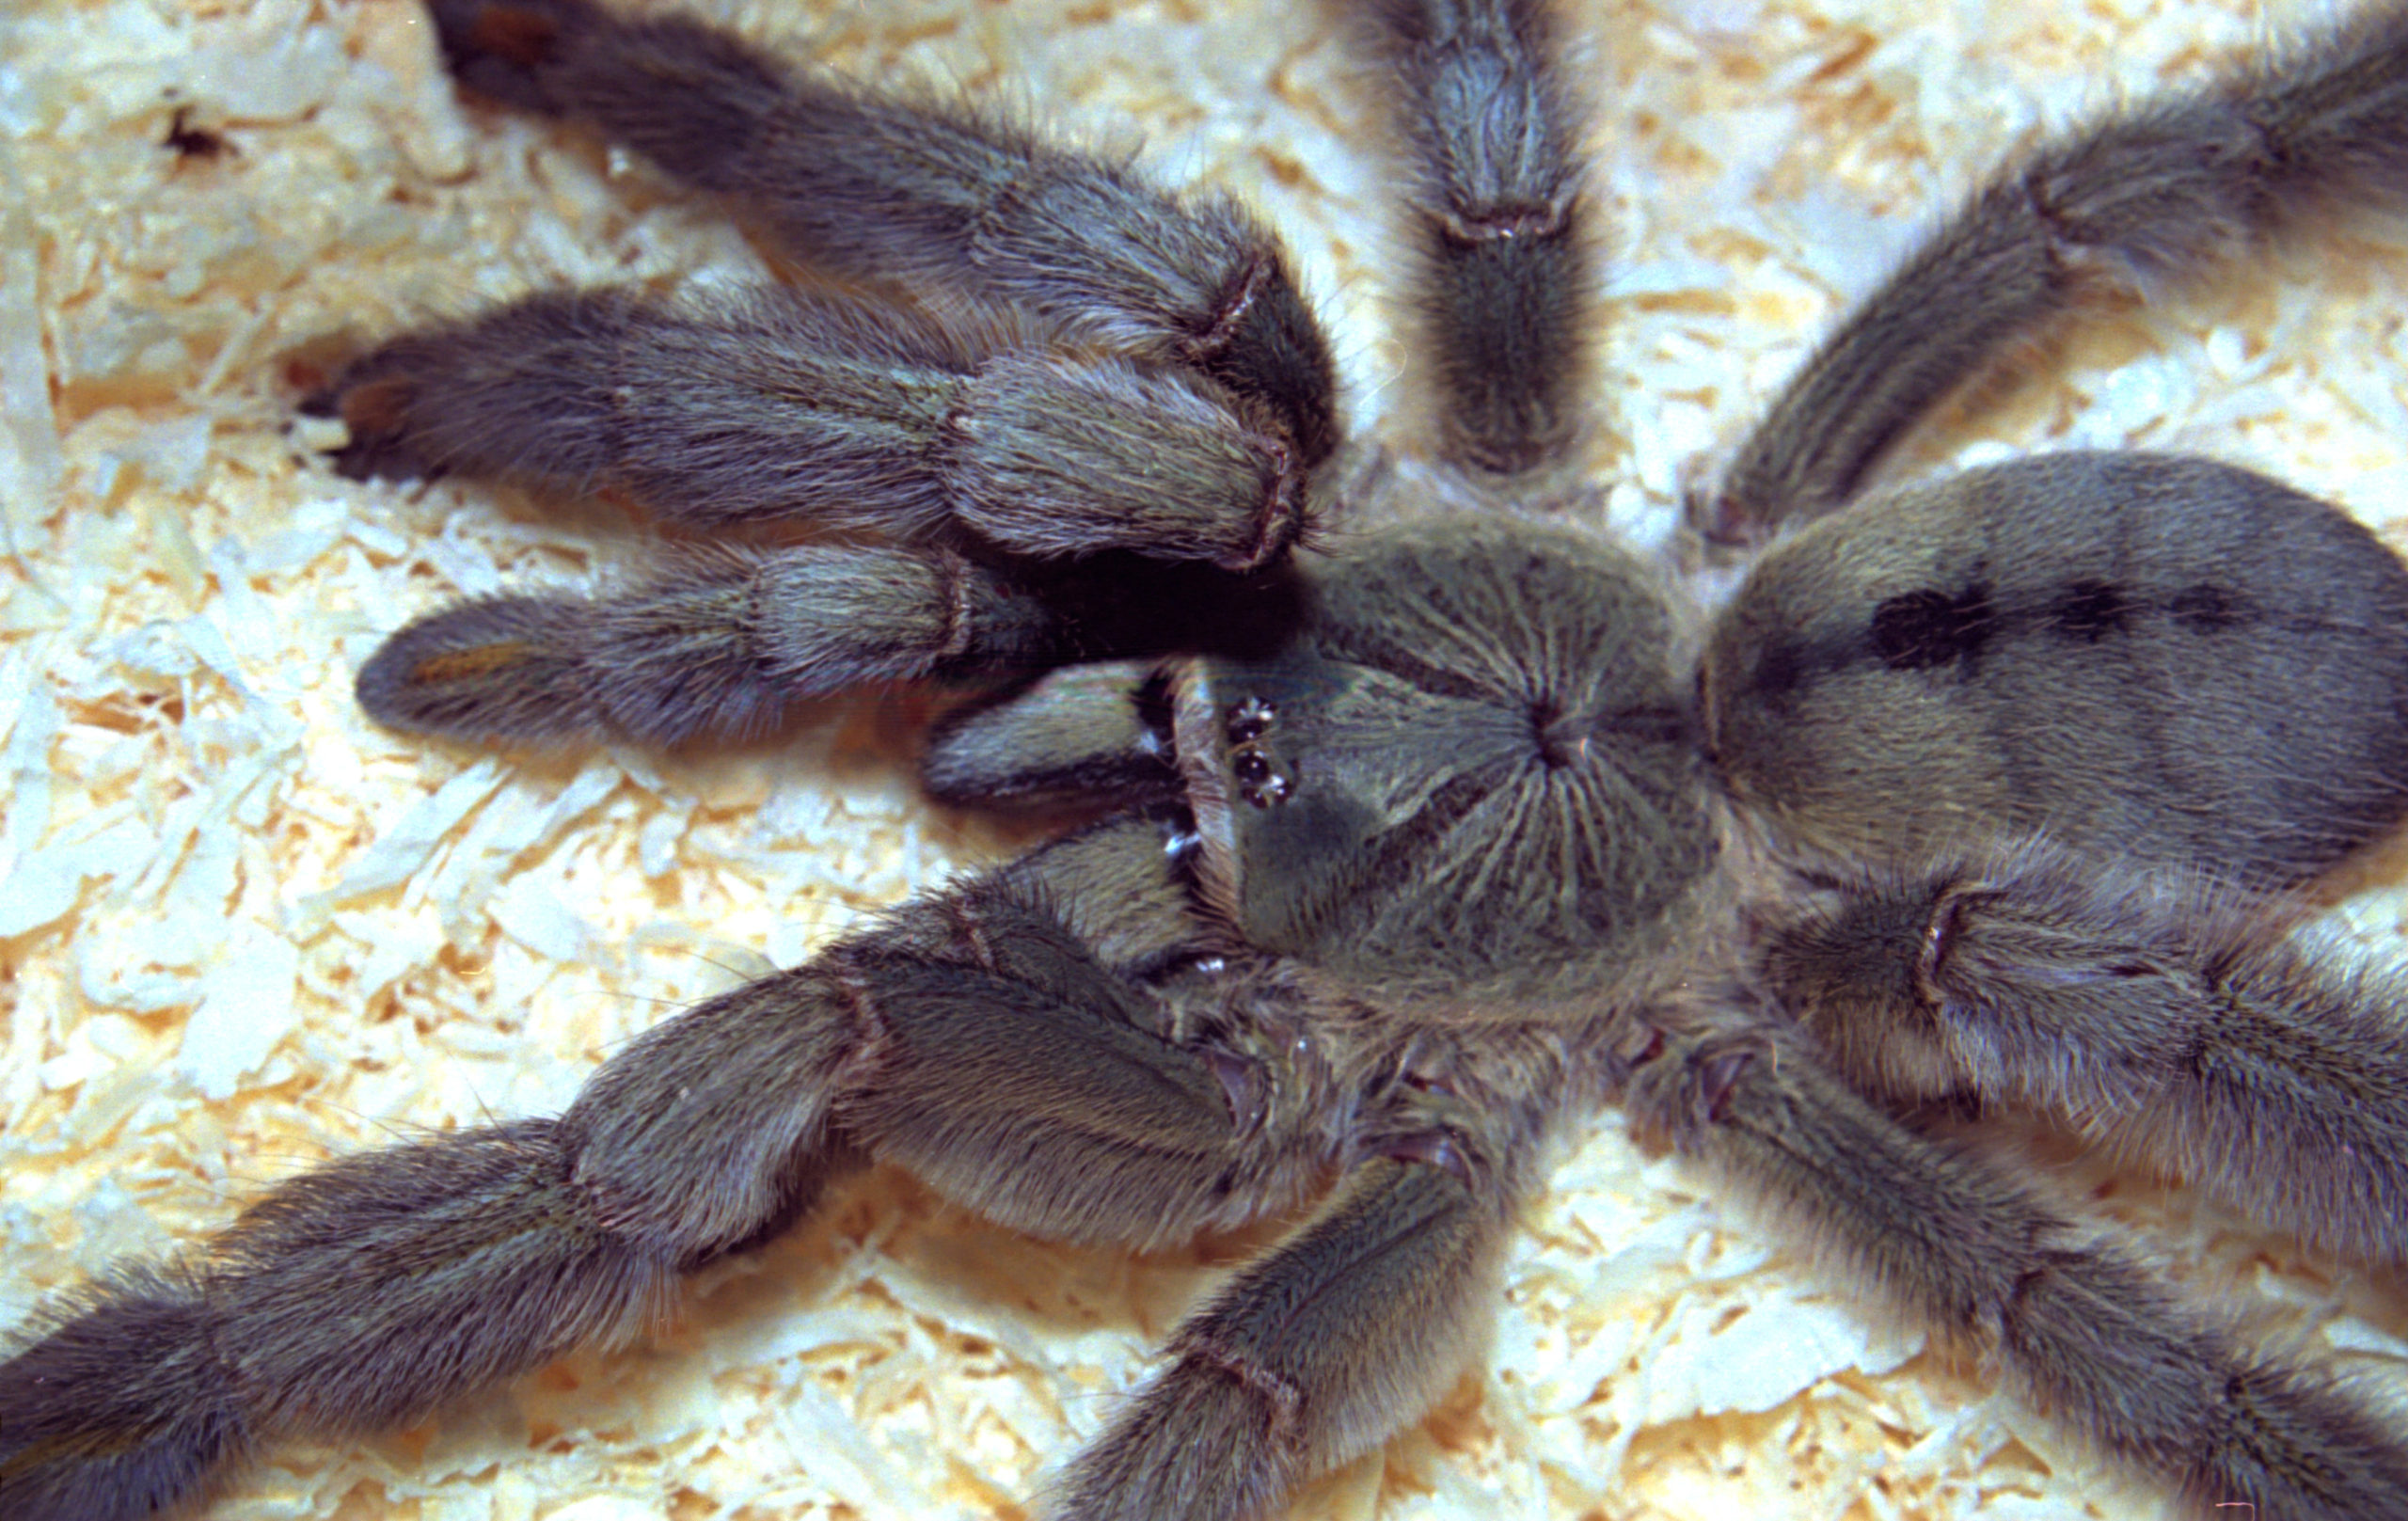 Trinidad Chevron Tarantula 7in/17.8cm, The Top 30 Worlds Biggest Spiders 2022 Update